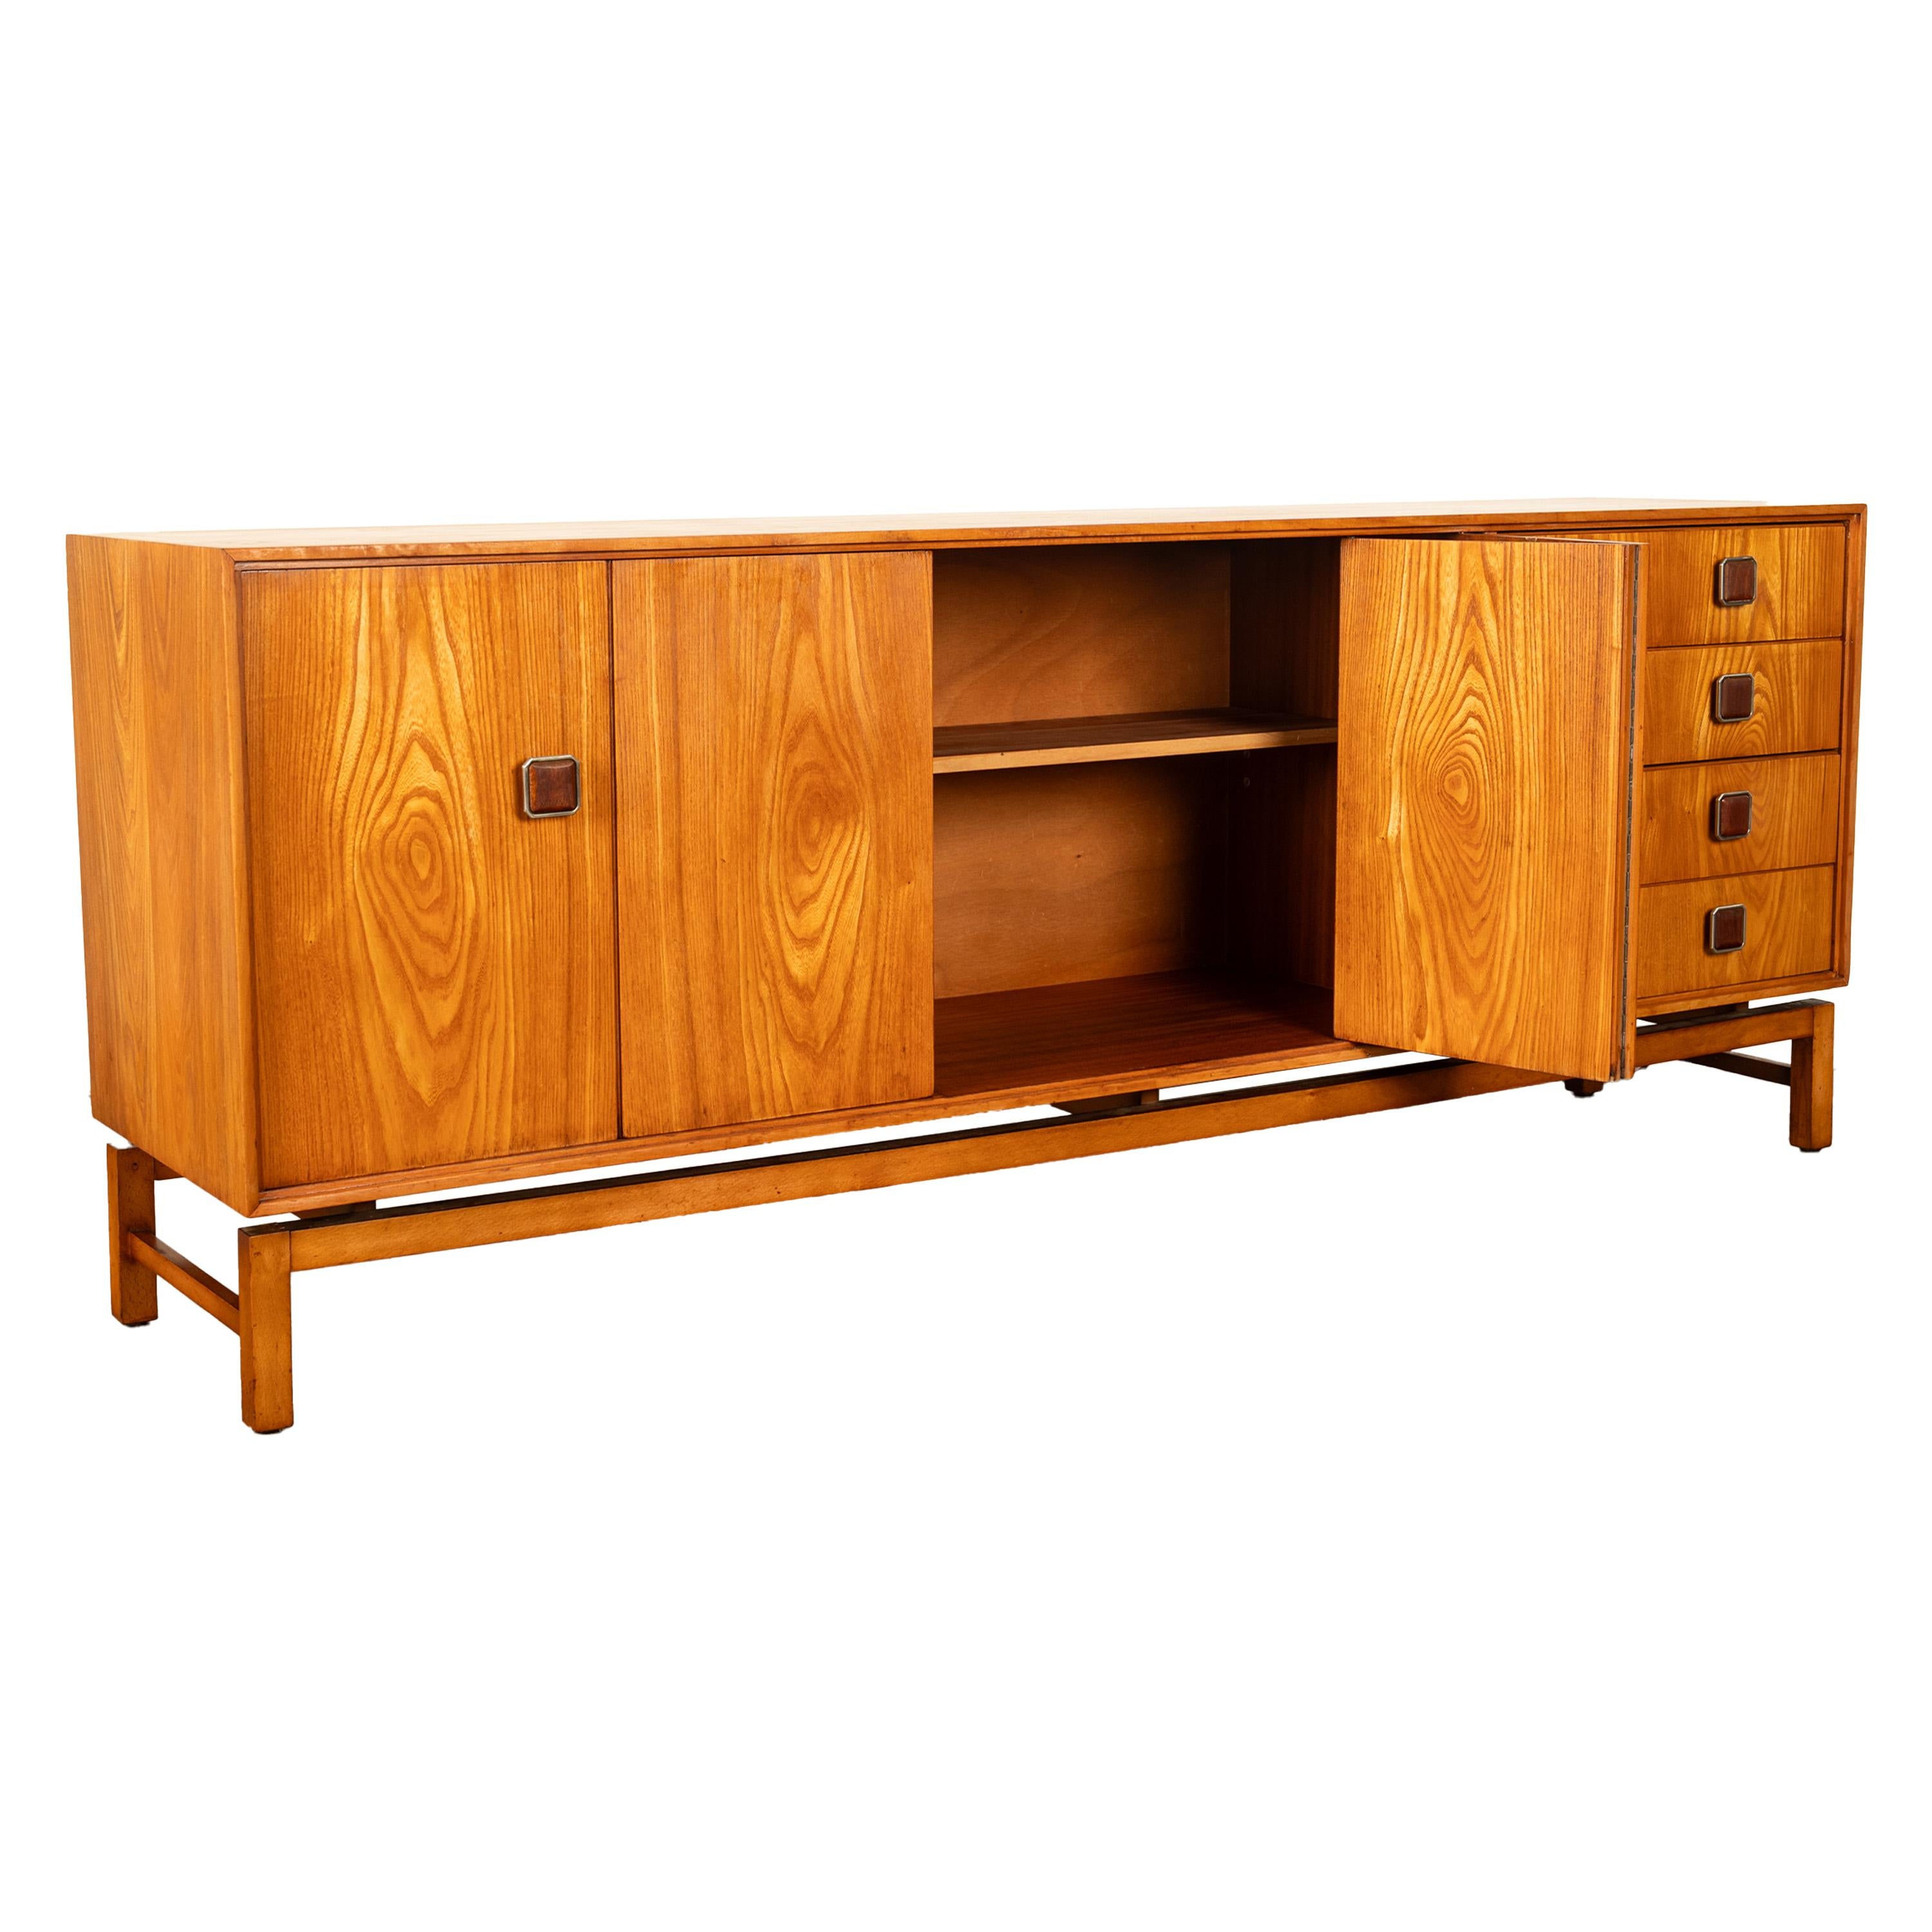 Original Danish Mid Century Modern Teak Credenza Sideboard Cabinet 6' Long 1960  5